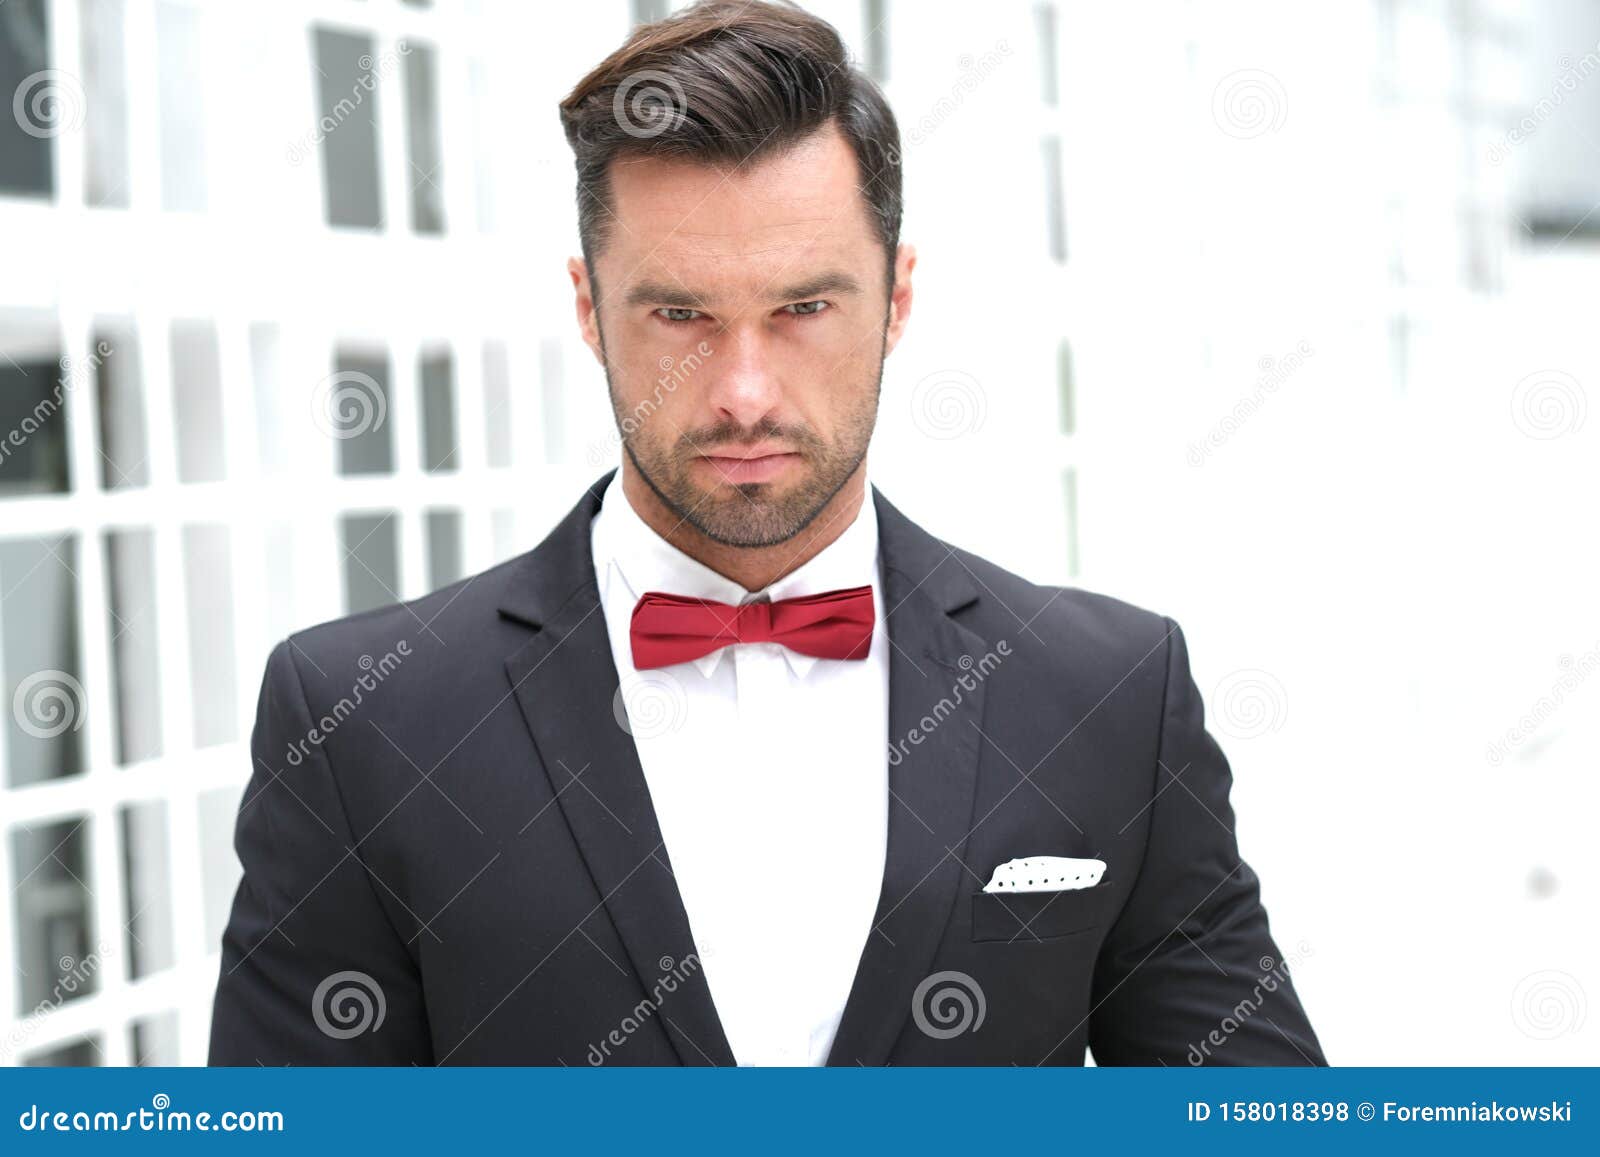 classy look best man wearing black suit red bow tie handsome looks stunning elegant 158018398